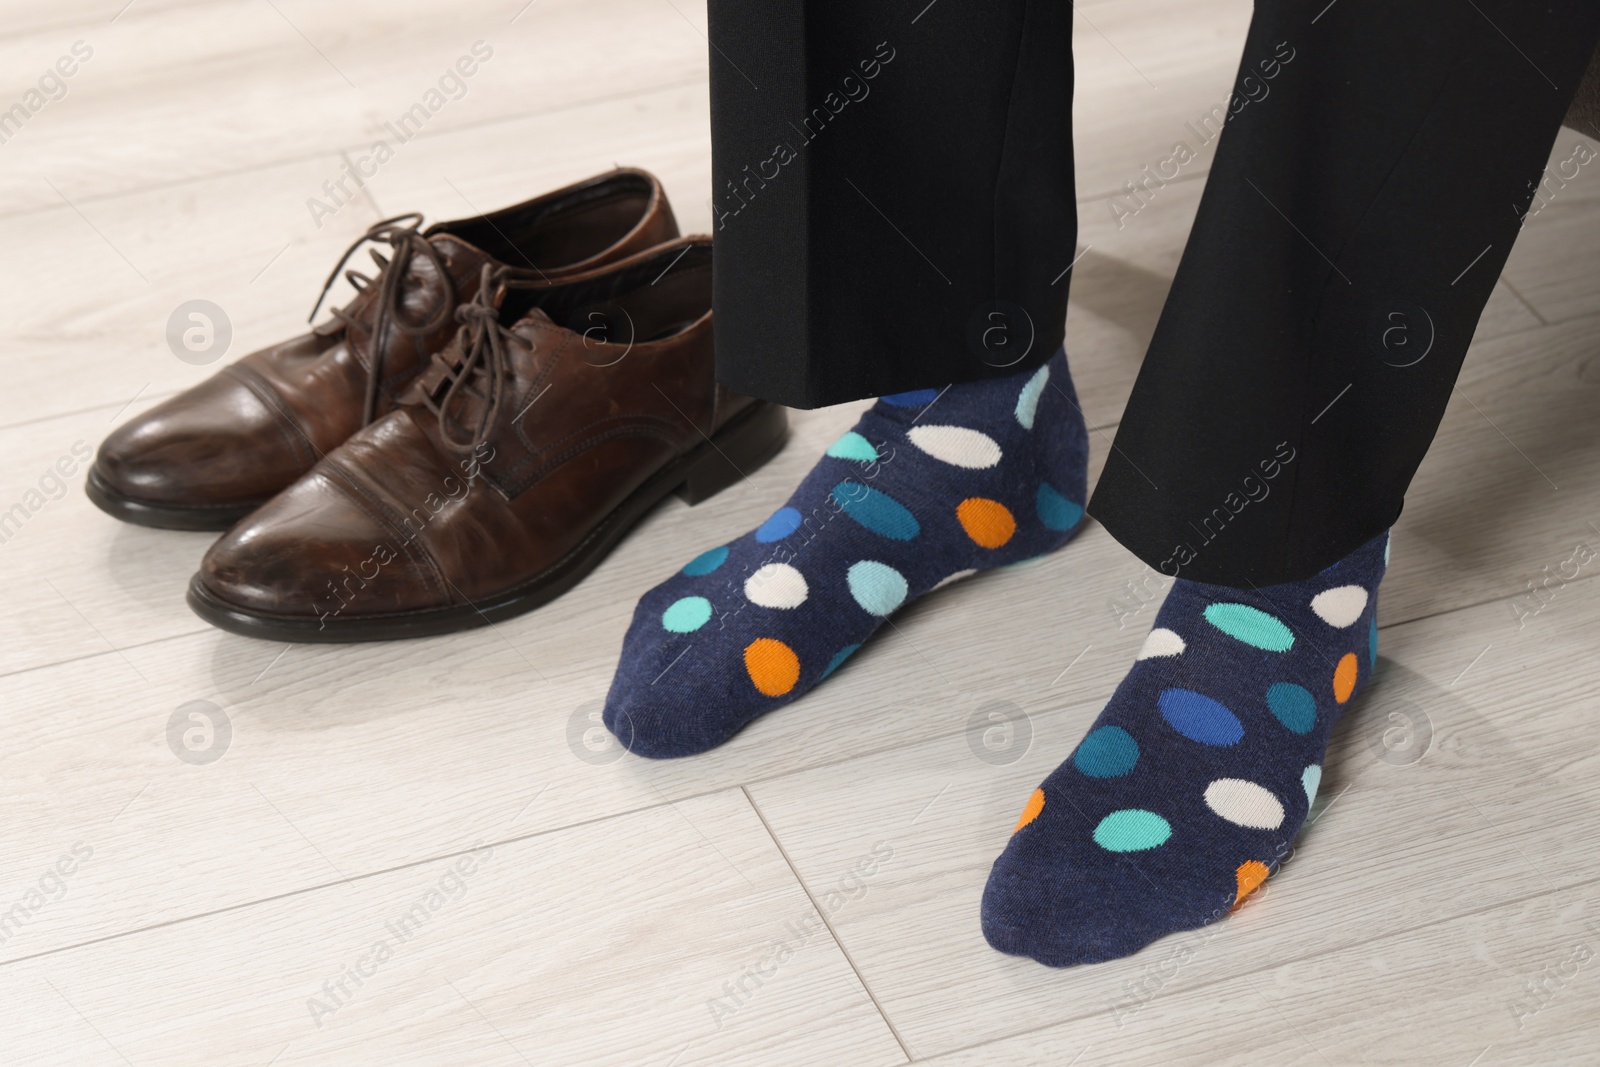 Photo of Man wearing colorful socks indoors, closeup view